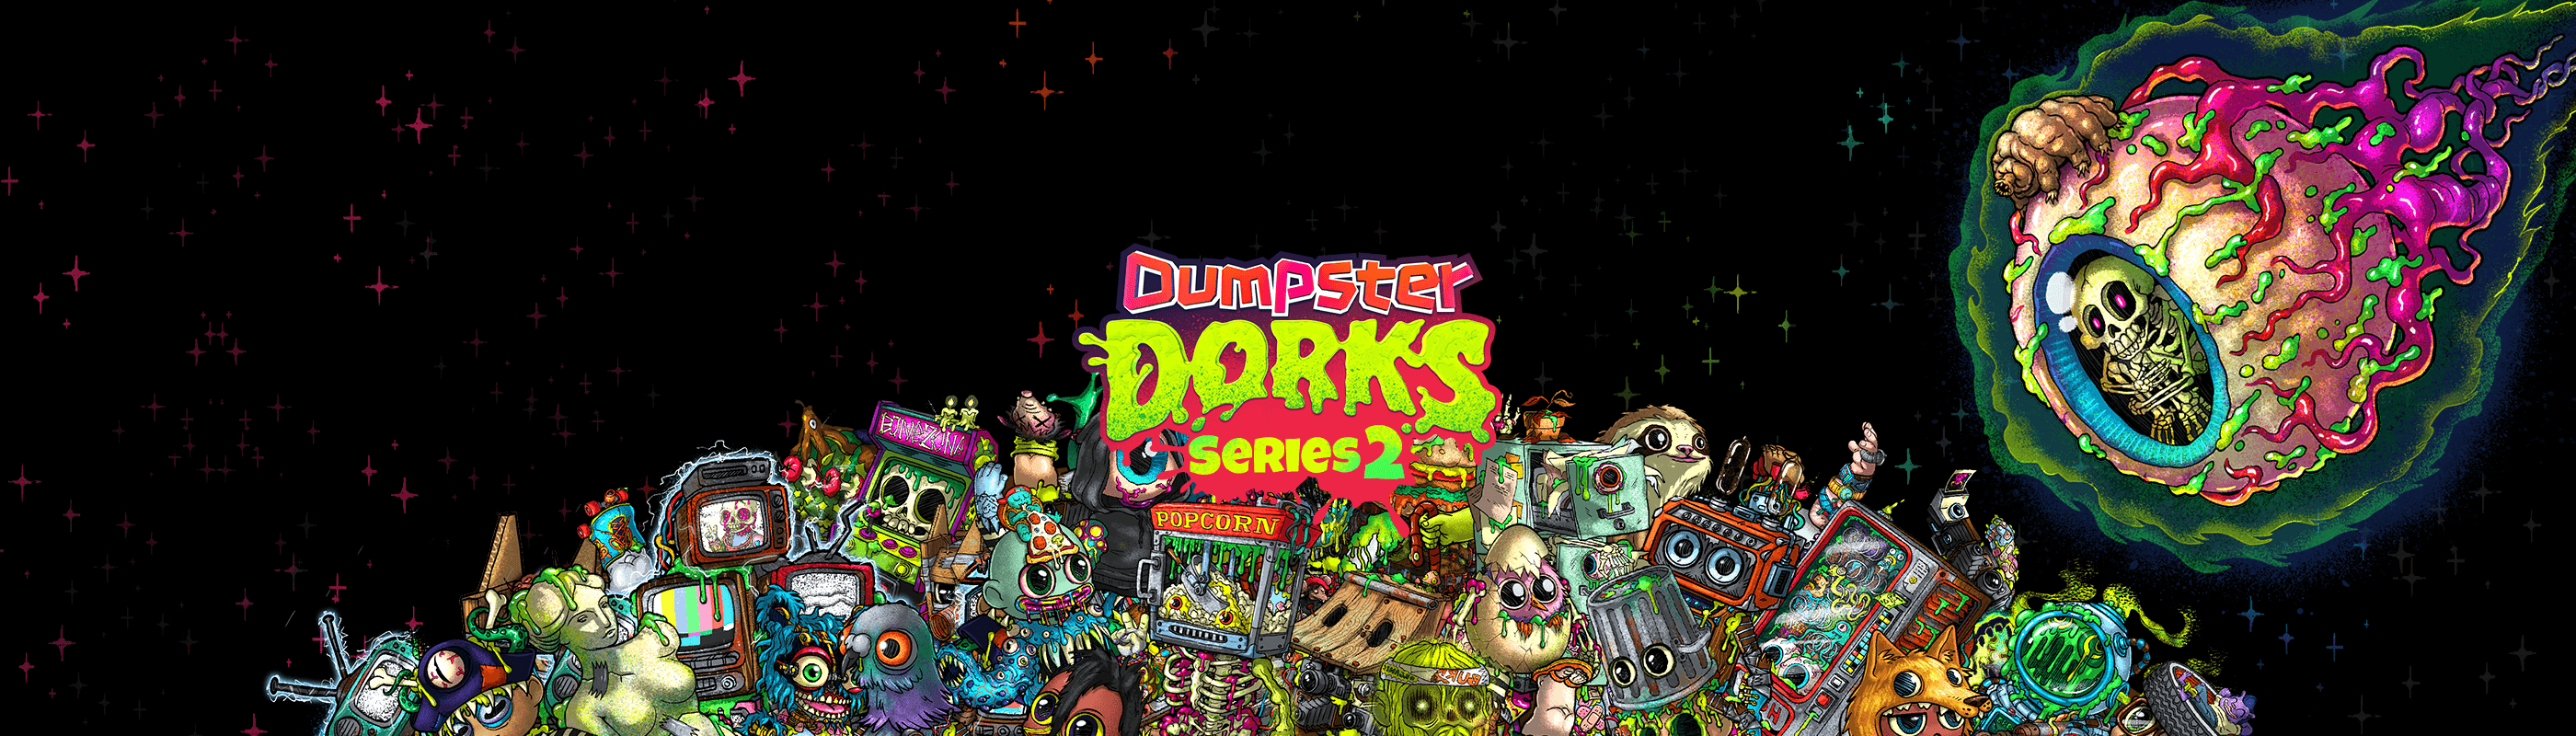 DumpsterDorks Series 2